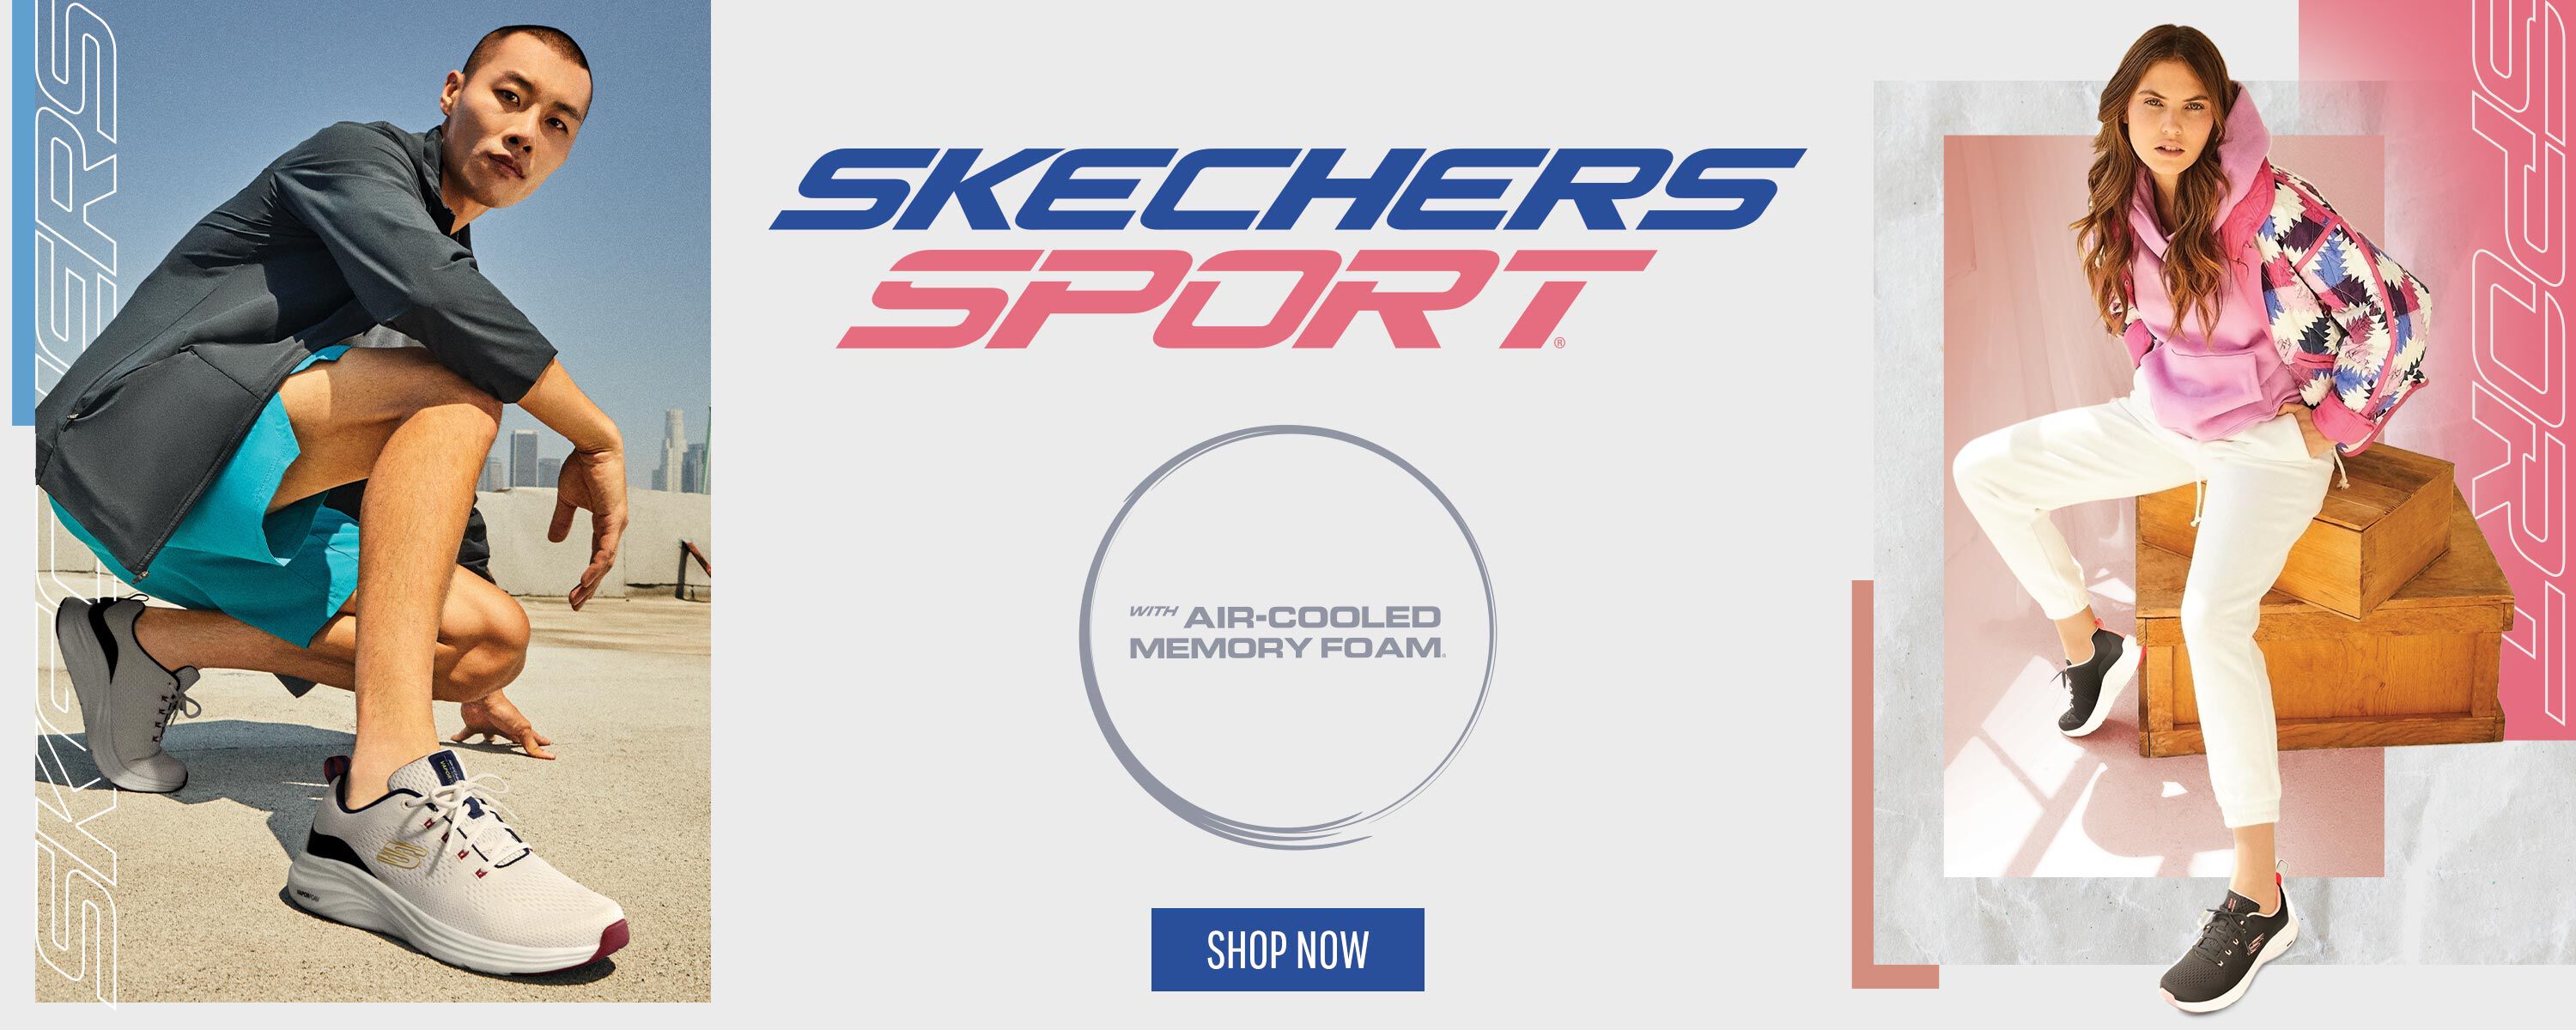 Skechers Sport - Air Cooled Memory Foam - Shop Now